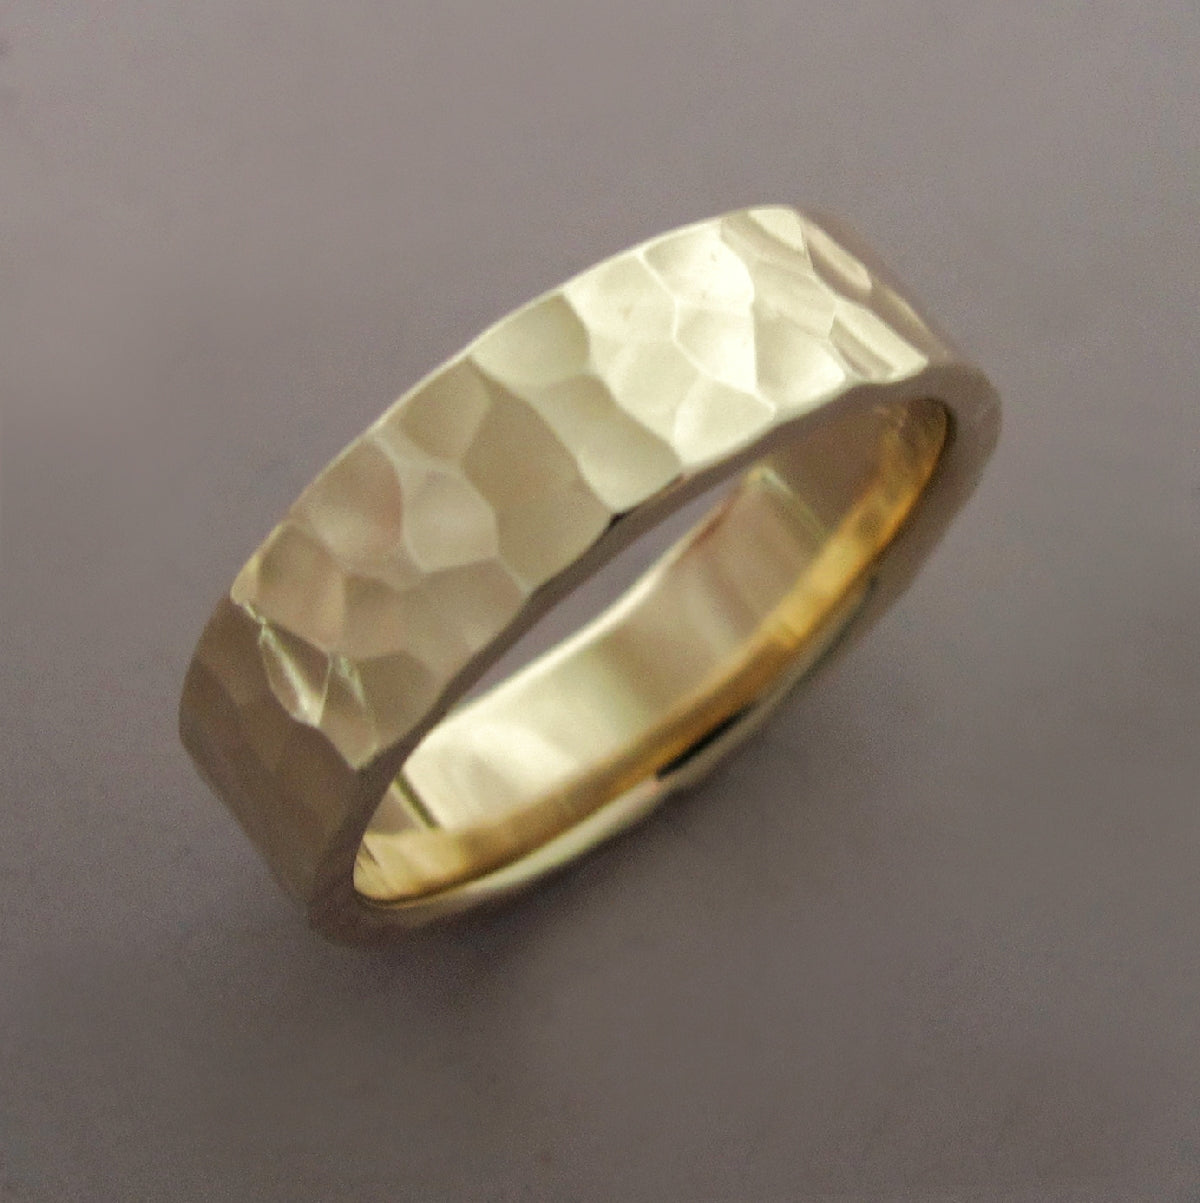 Satin finish gold ring, simple wedding band, 4 mm width | Eden Garden  Jewelry™